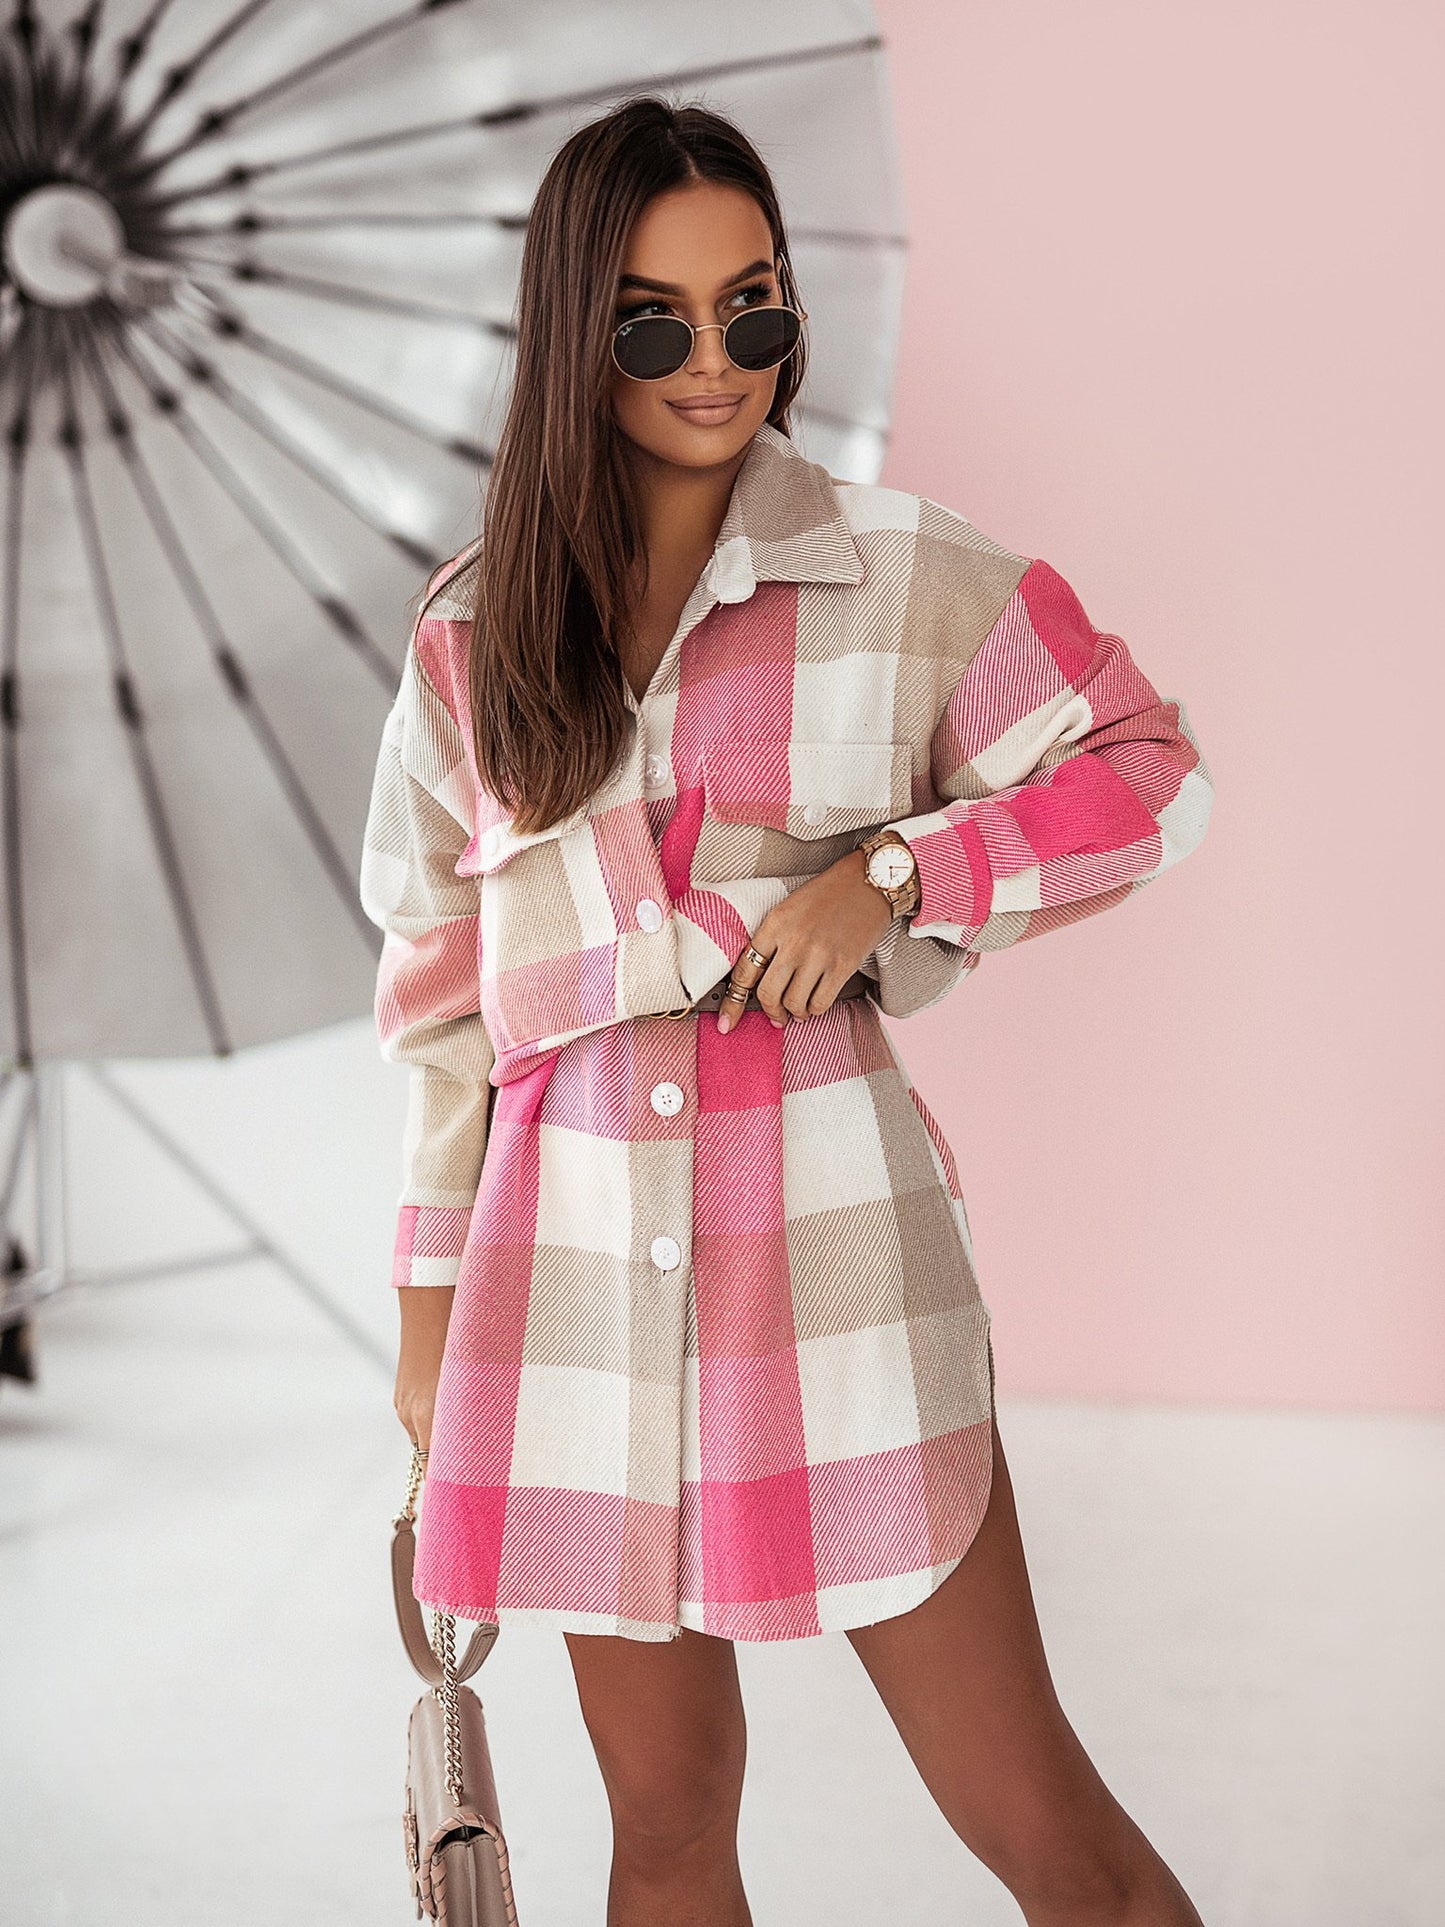 Women's Fashion Long Sleeve Color Plaid Brushed Woolen Long Coat | GlamzLife